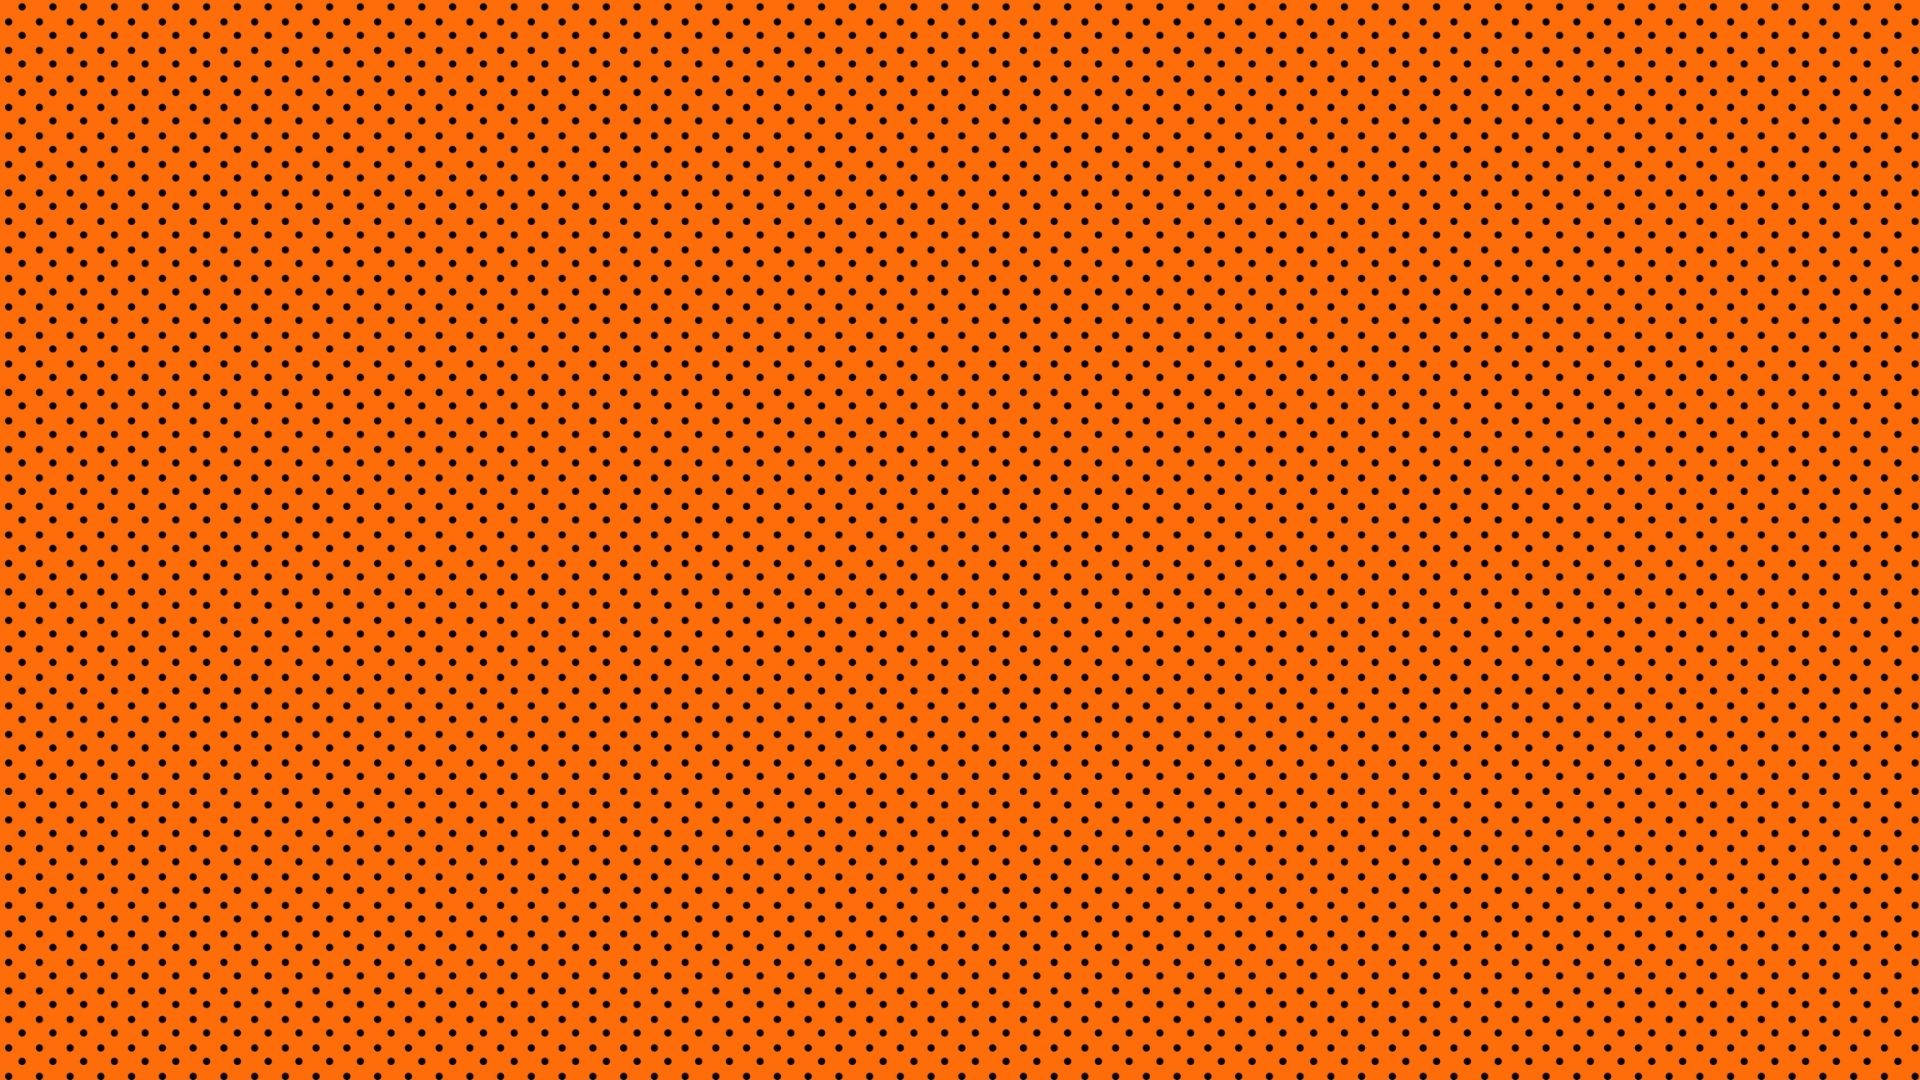 Black Dots On An Orange Background Background